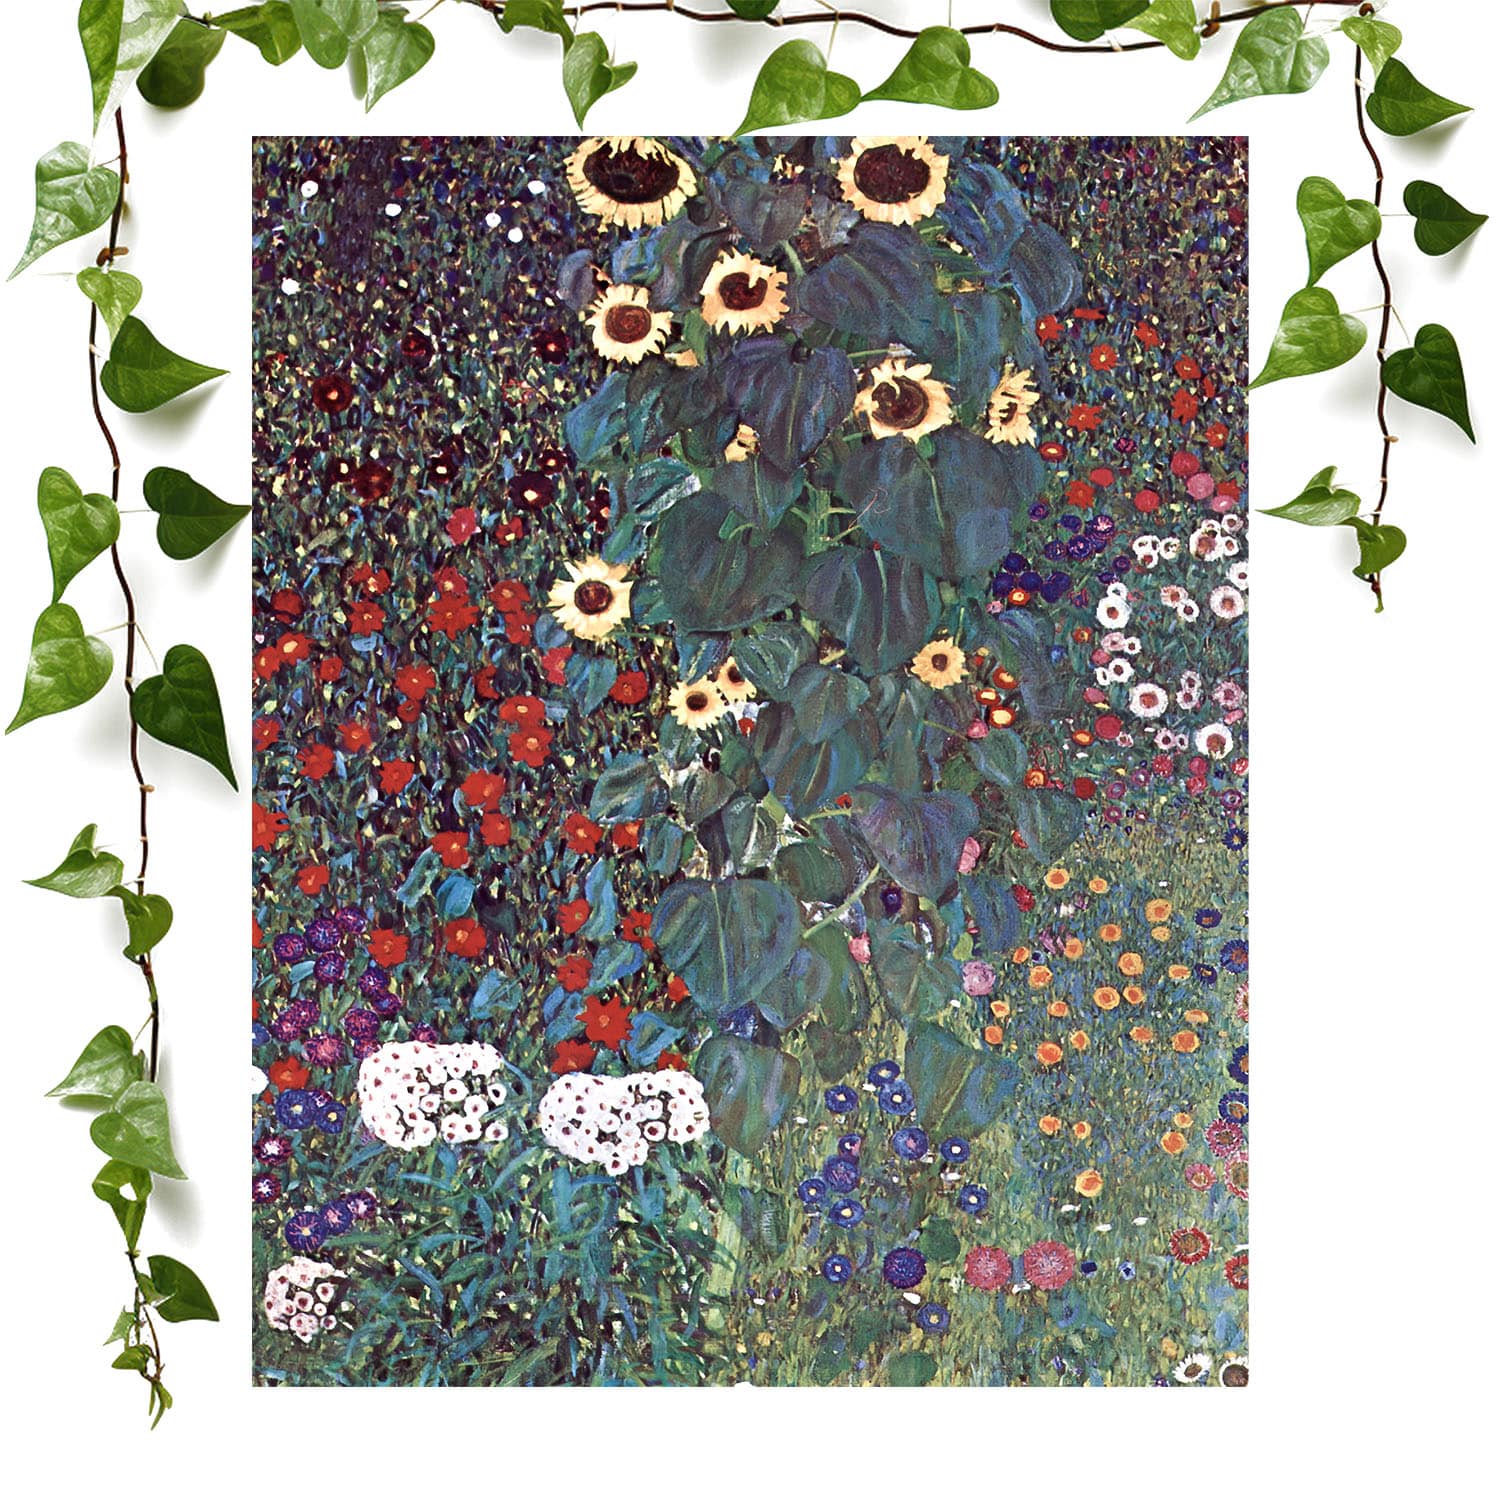 Boho Flower Painting art prints featuring a nature decor, vintage wall art room decor